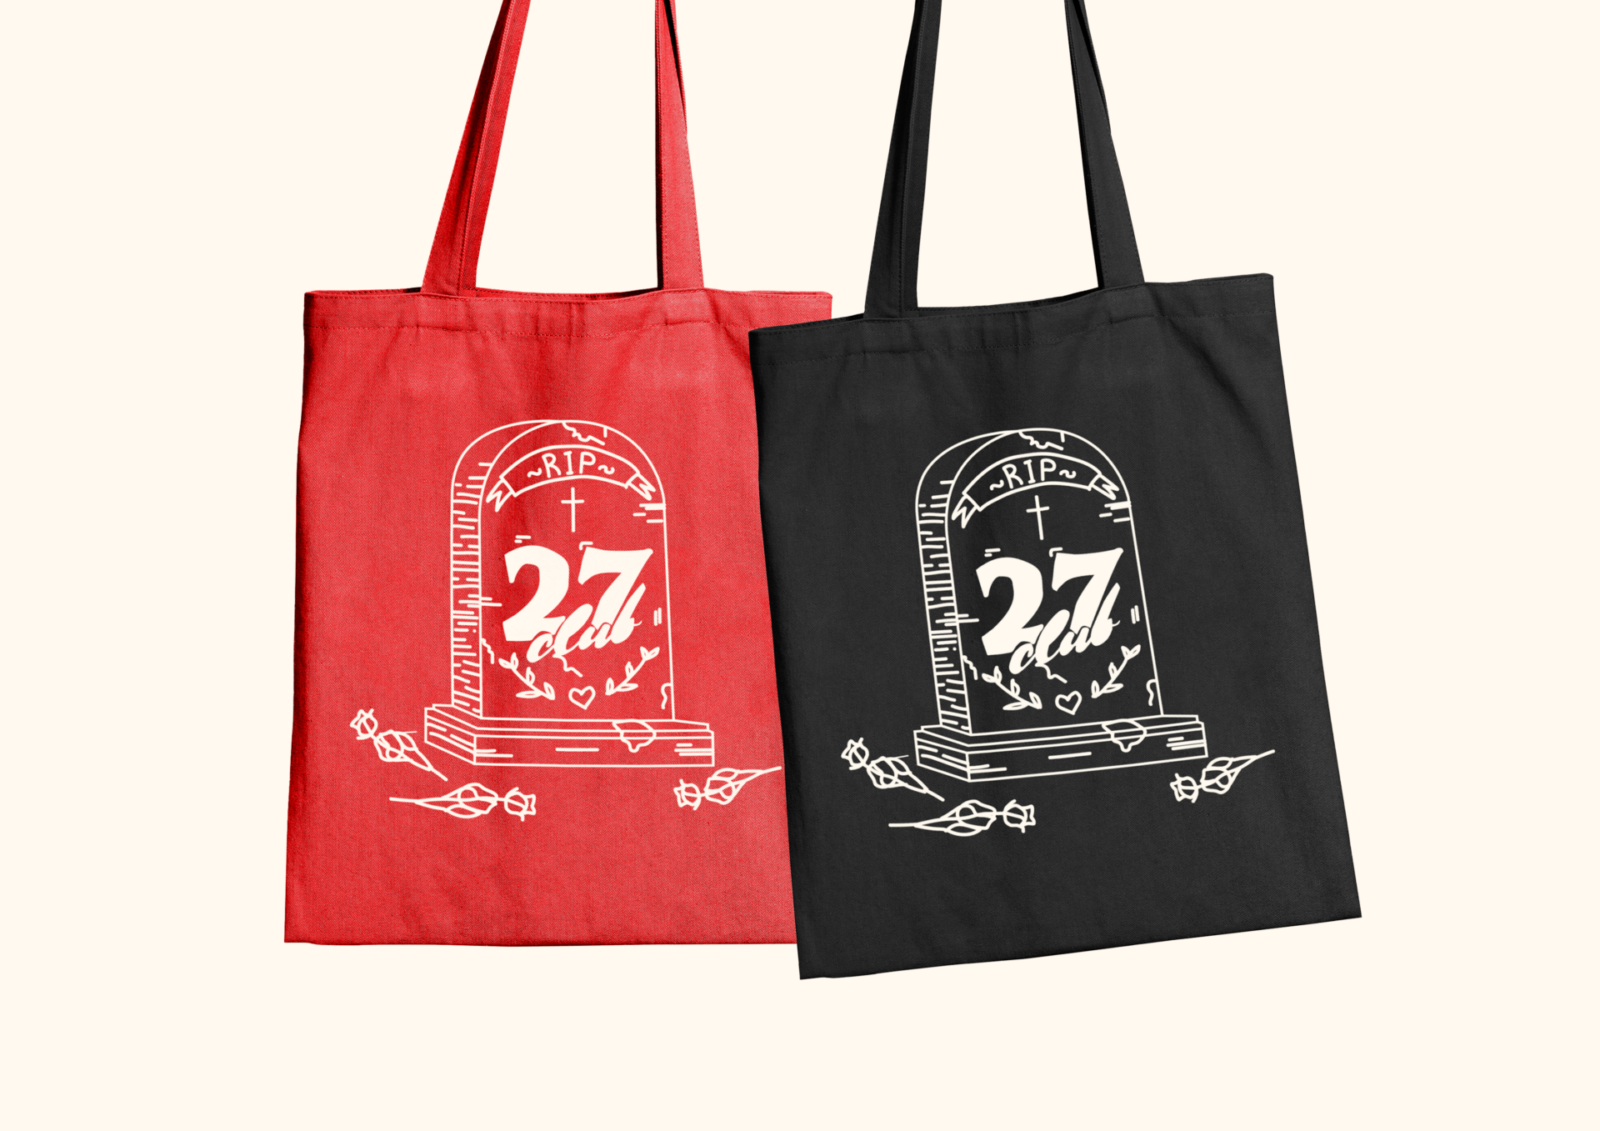 Tote bag design for '27 Club'